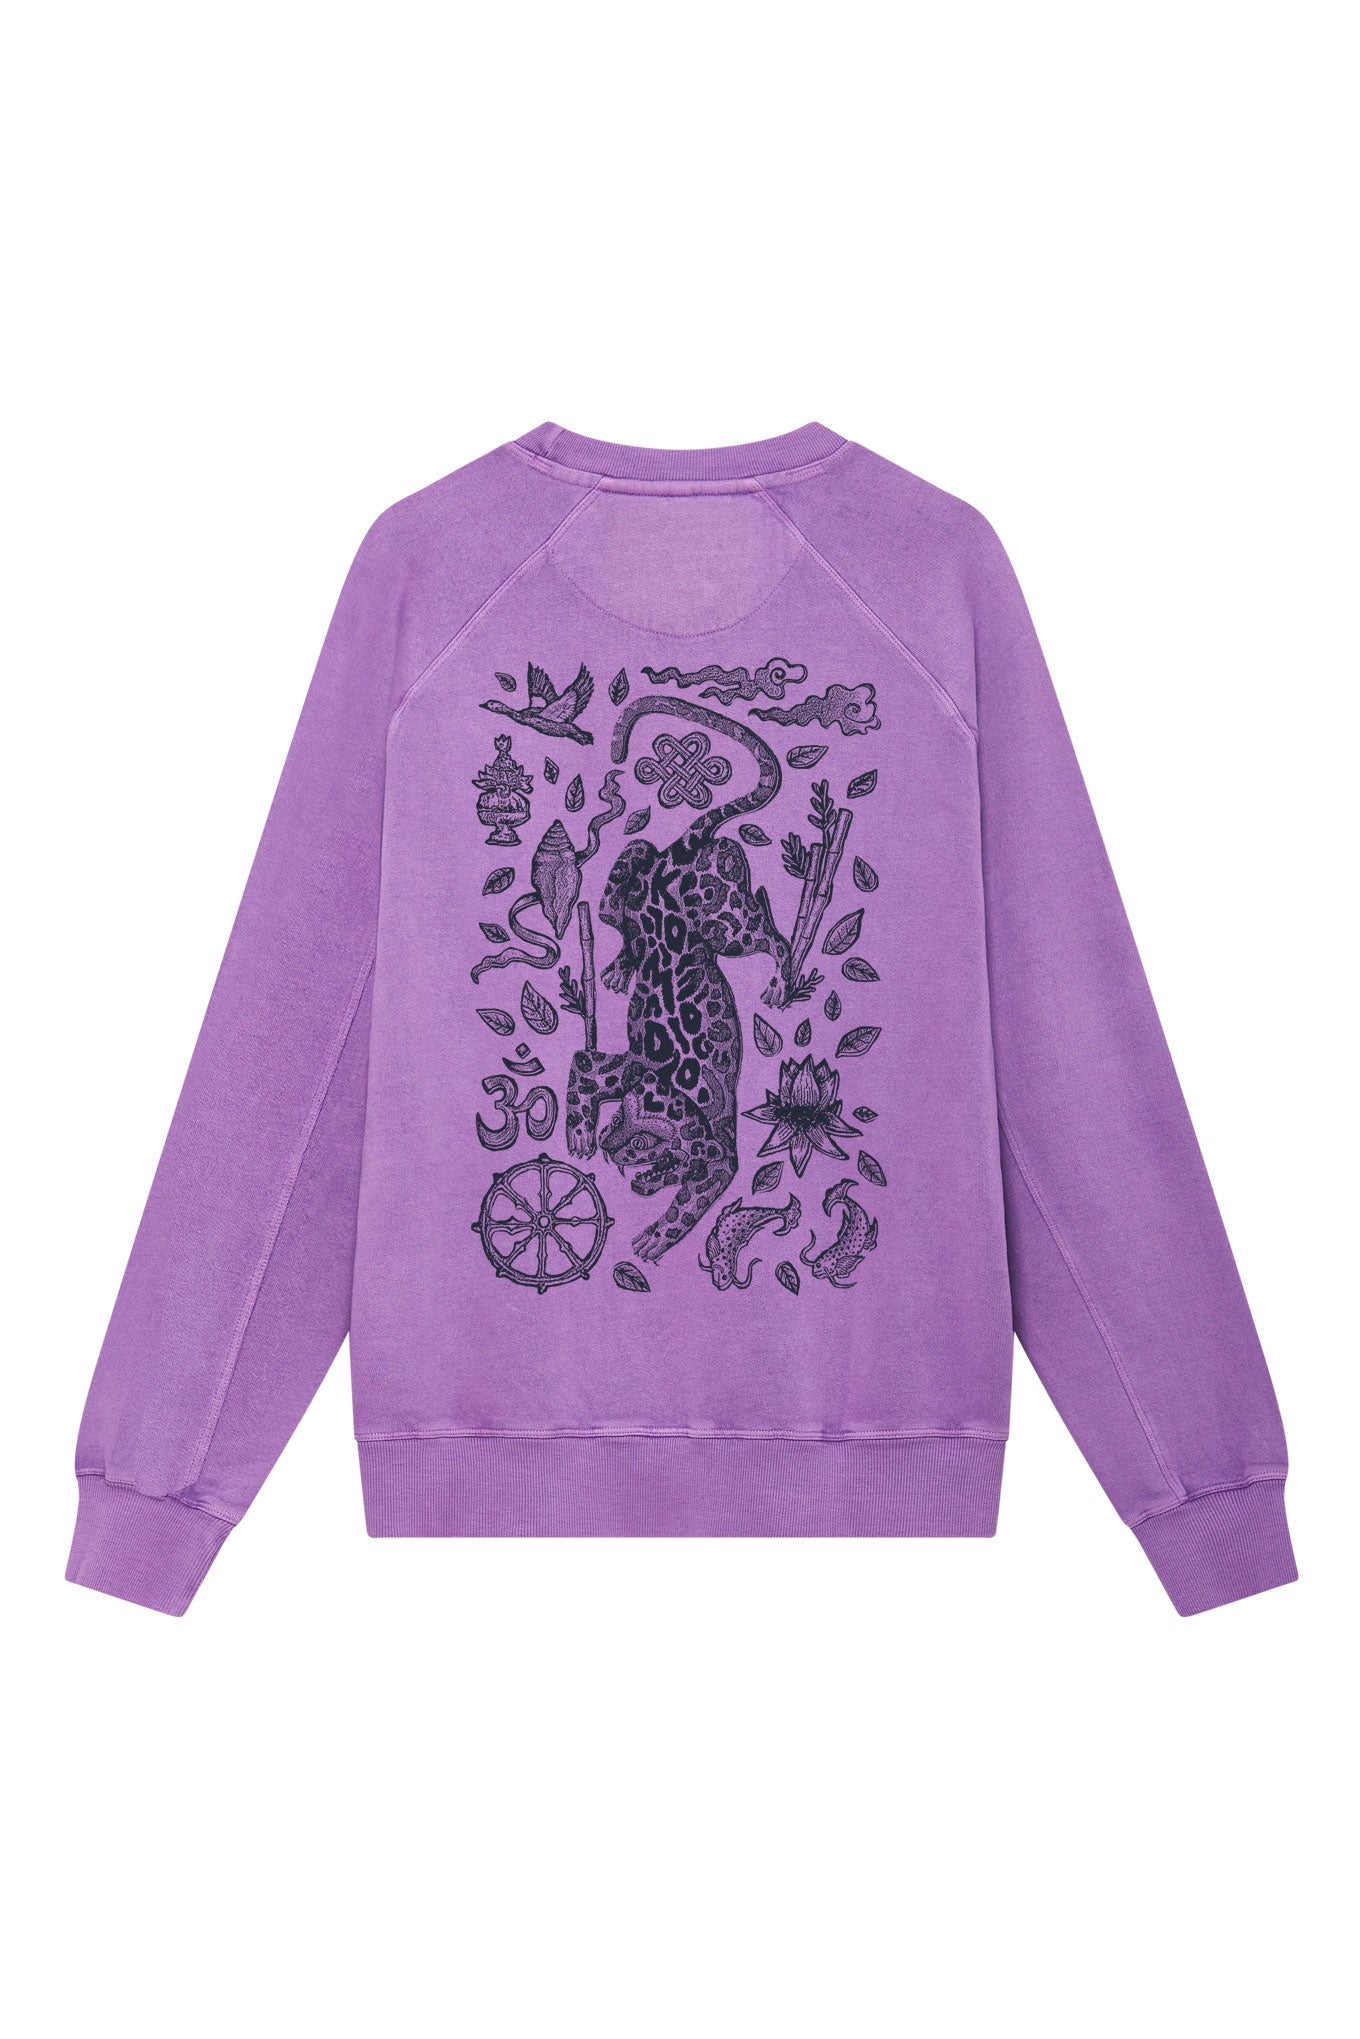 Purple, long-sleeved sweater NEPALI LEOPARD made from 100% organic cotton by Komodo